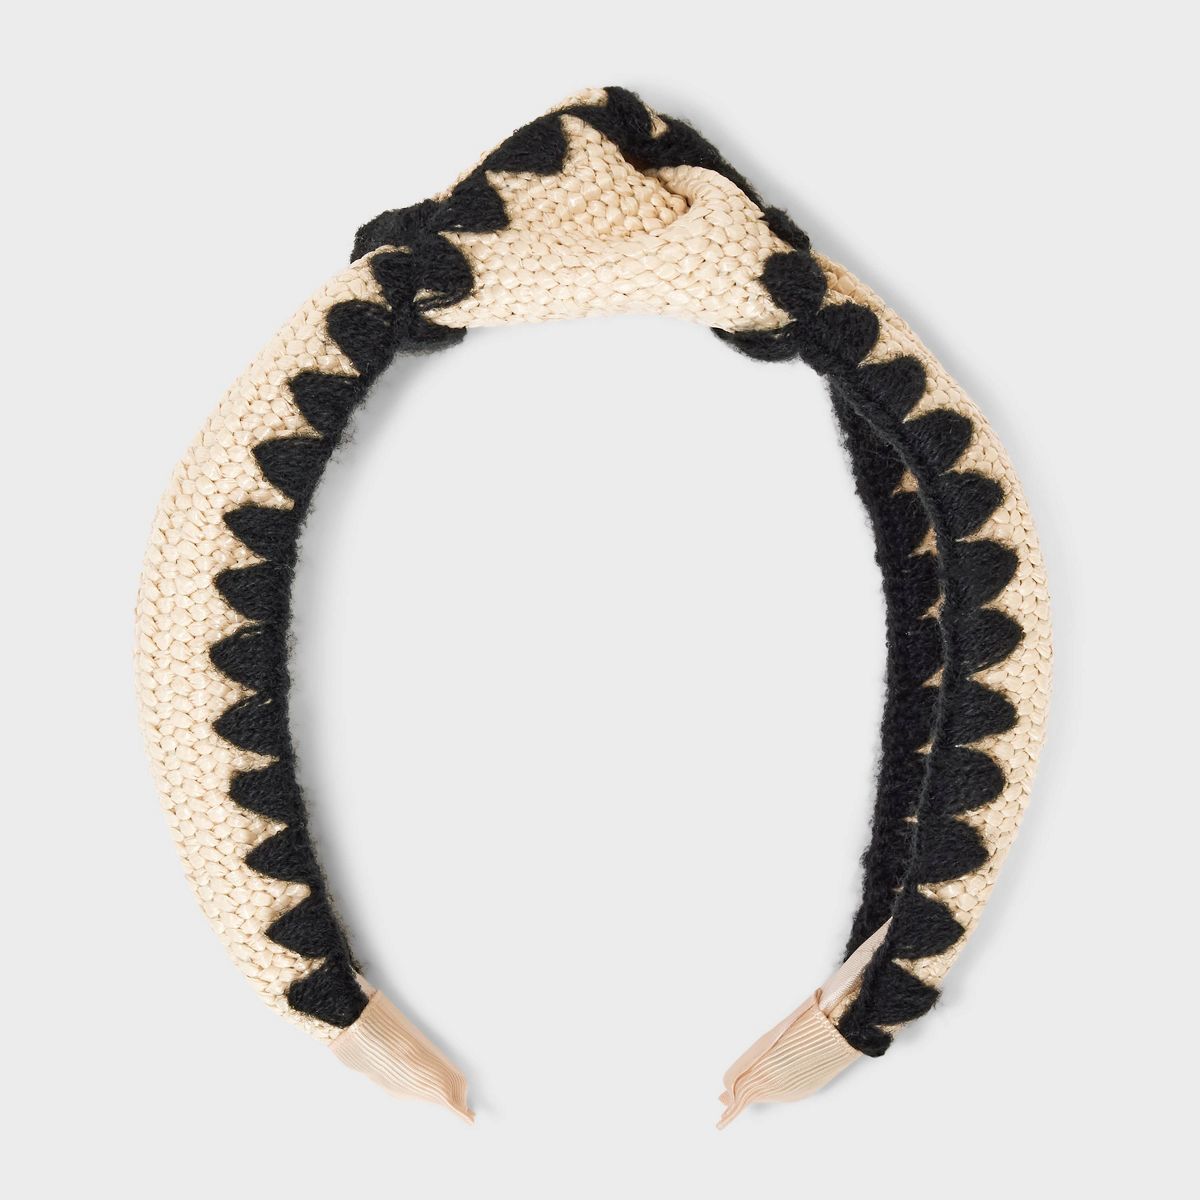 Top Knot Raffia Natural with Black Edging Headband - Universal Thread™ Tan | Target